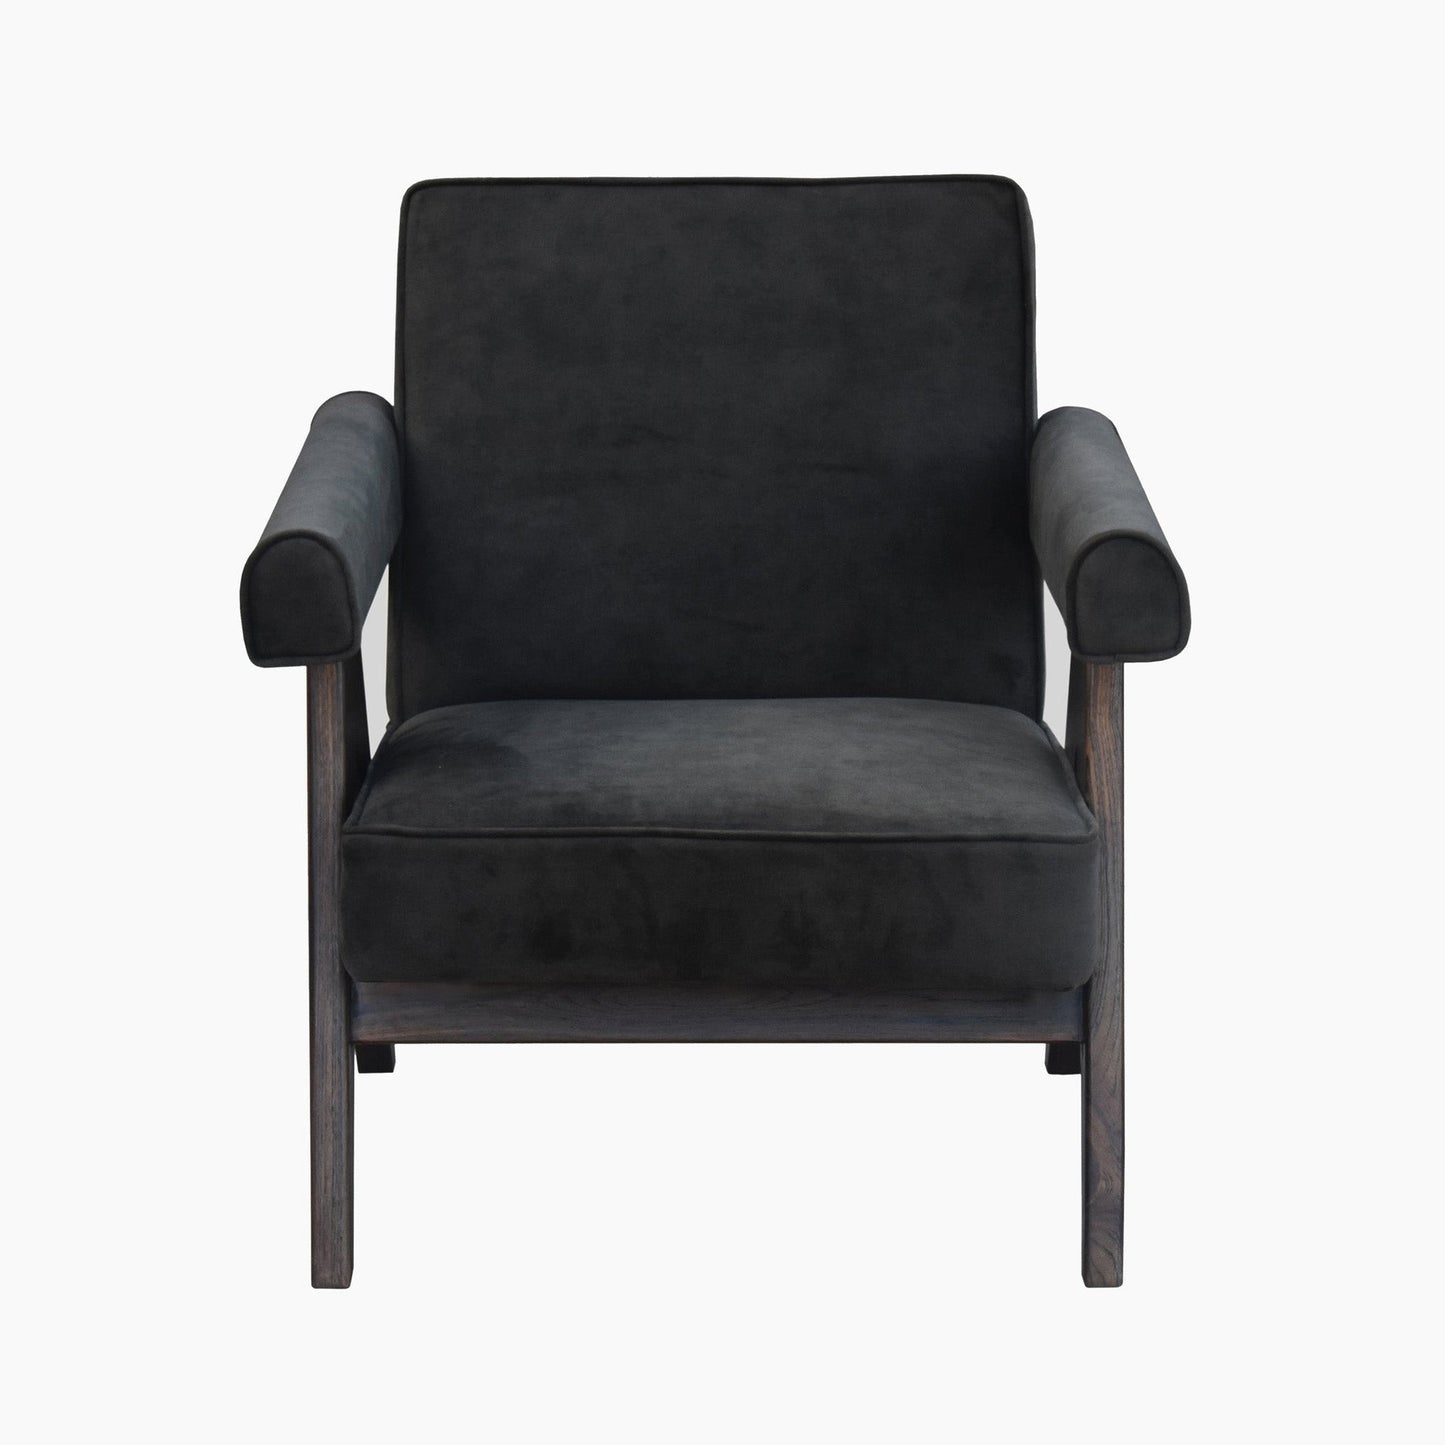 Jeanneret Senate Lounge Chair - Floor Model - Grade B